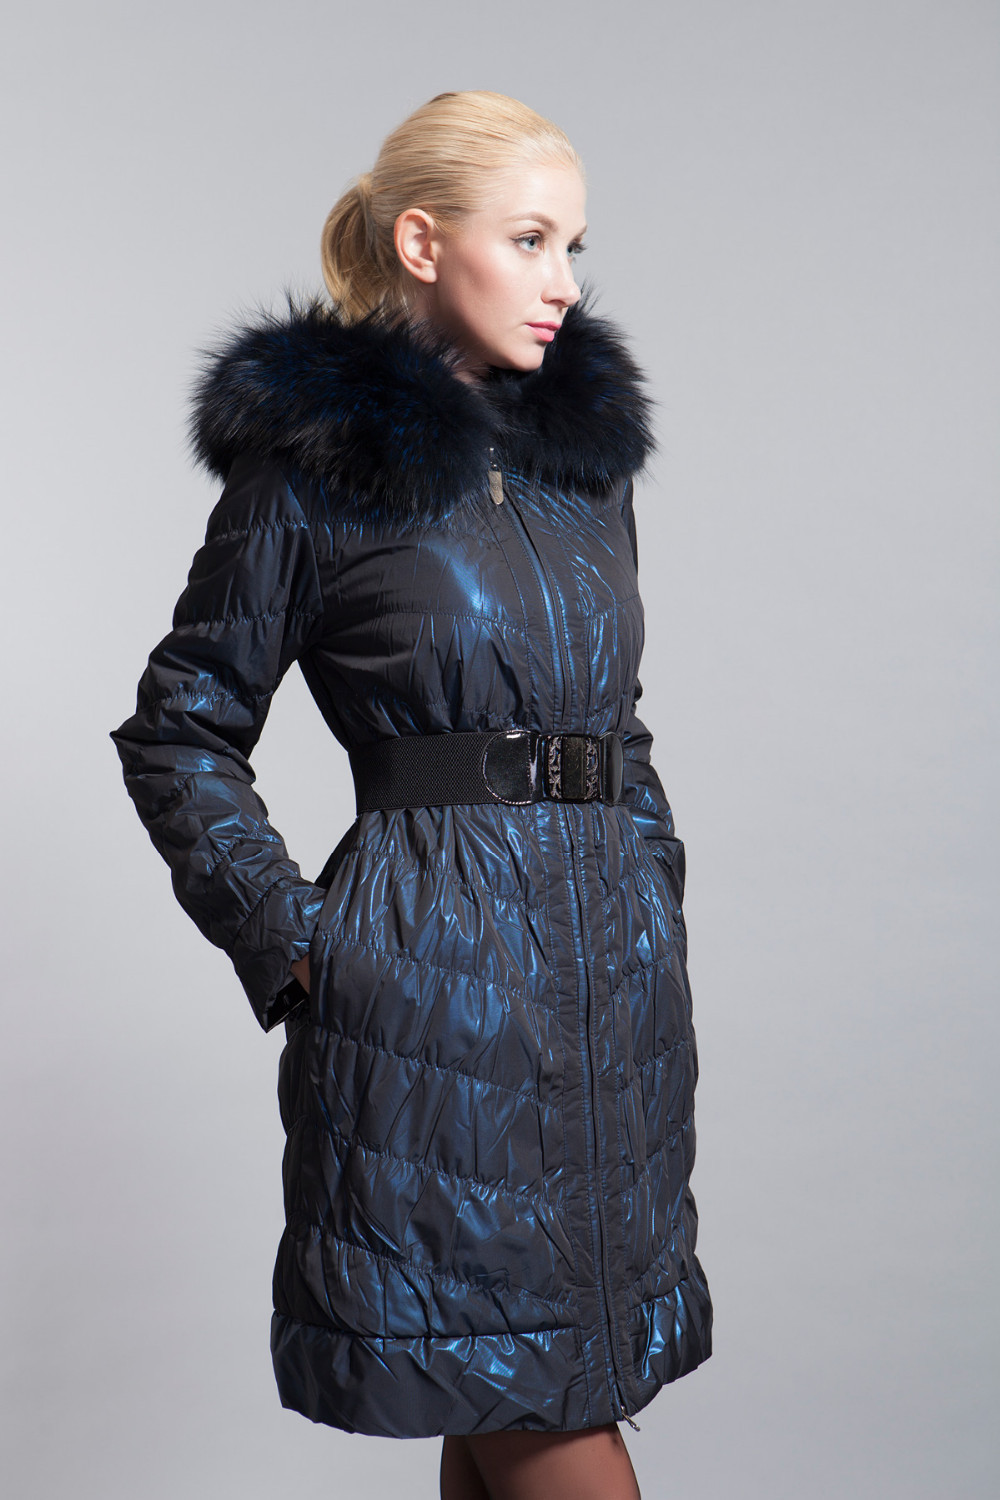 BASIC-EDITIONS-Winter-New-Fashion-Women39s-Fur-Hooded-Long-Parkas-Slim-Fit-Jacket-Women-Cotton-Coat--32242494605